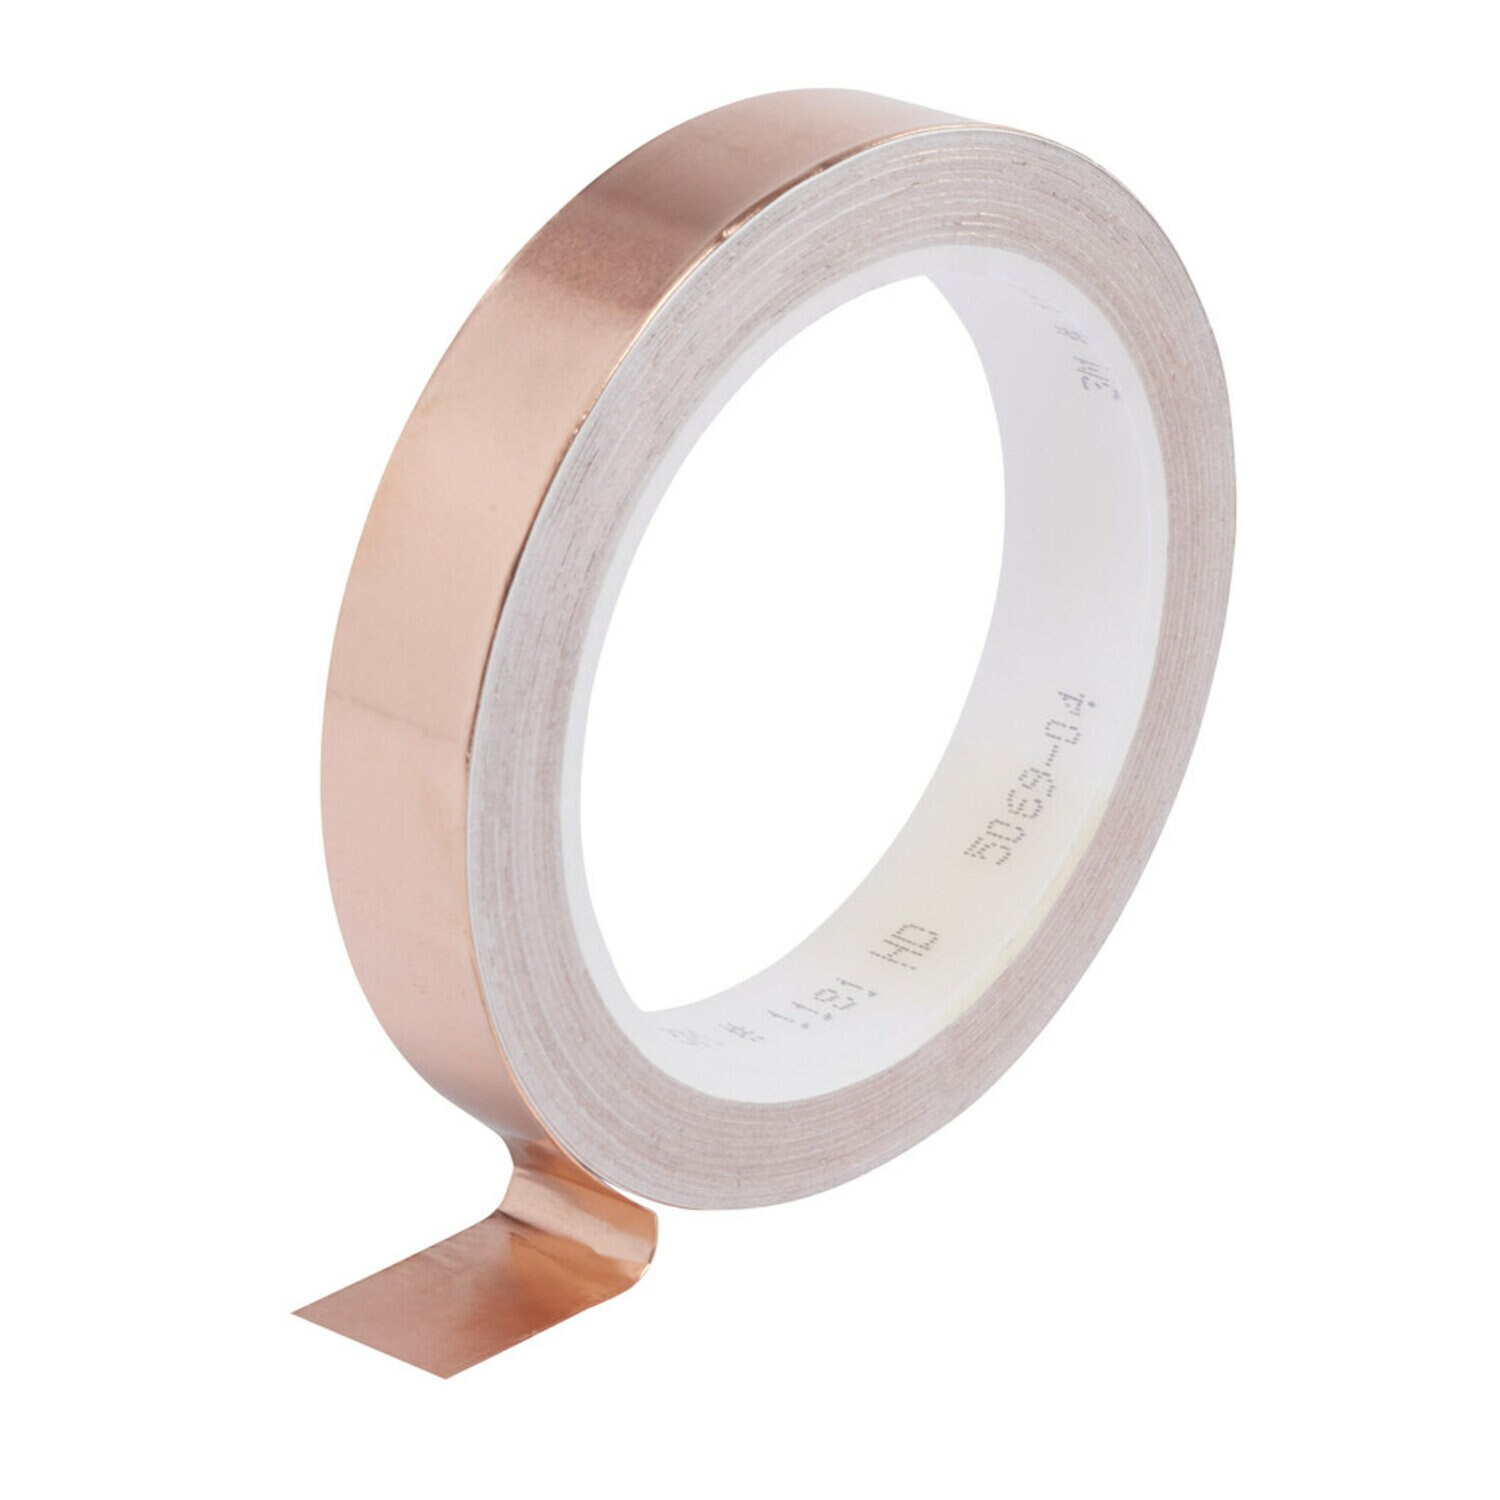 7100033055 - 3M Copper EMI Shielding Tape 1181, 25 mm x 16,5 m, 9 Rolls/Case